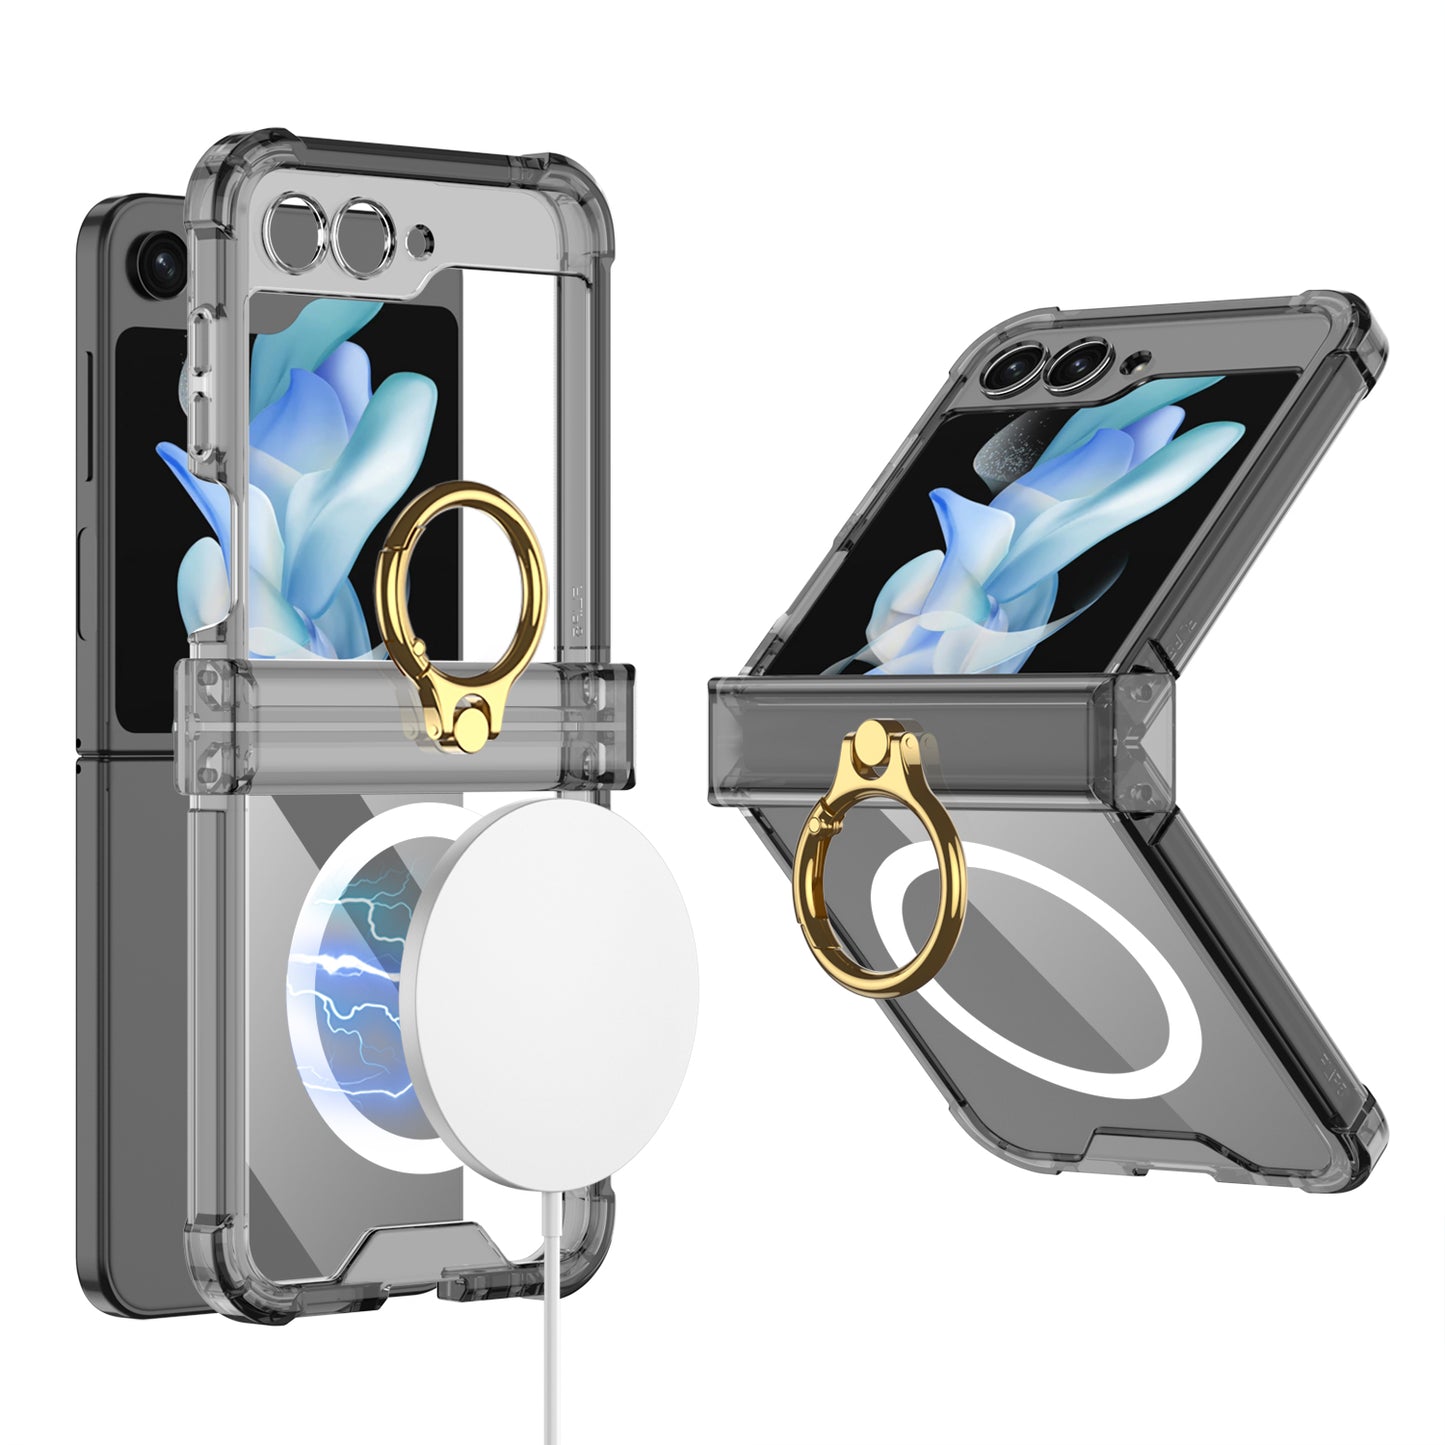 Magnetic MagSafe Airbag Ring Hinge Phone Case For Samsung Galaxy Z Flip5 Flip4 Flip3